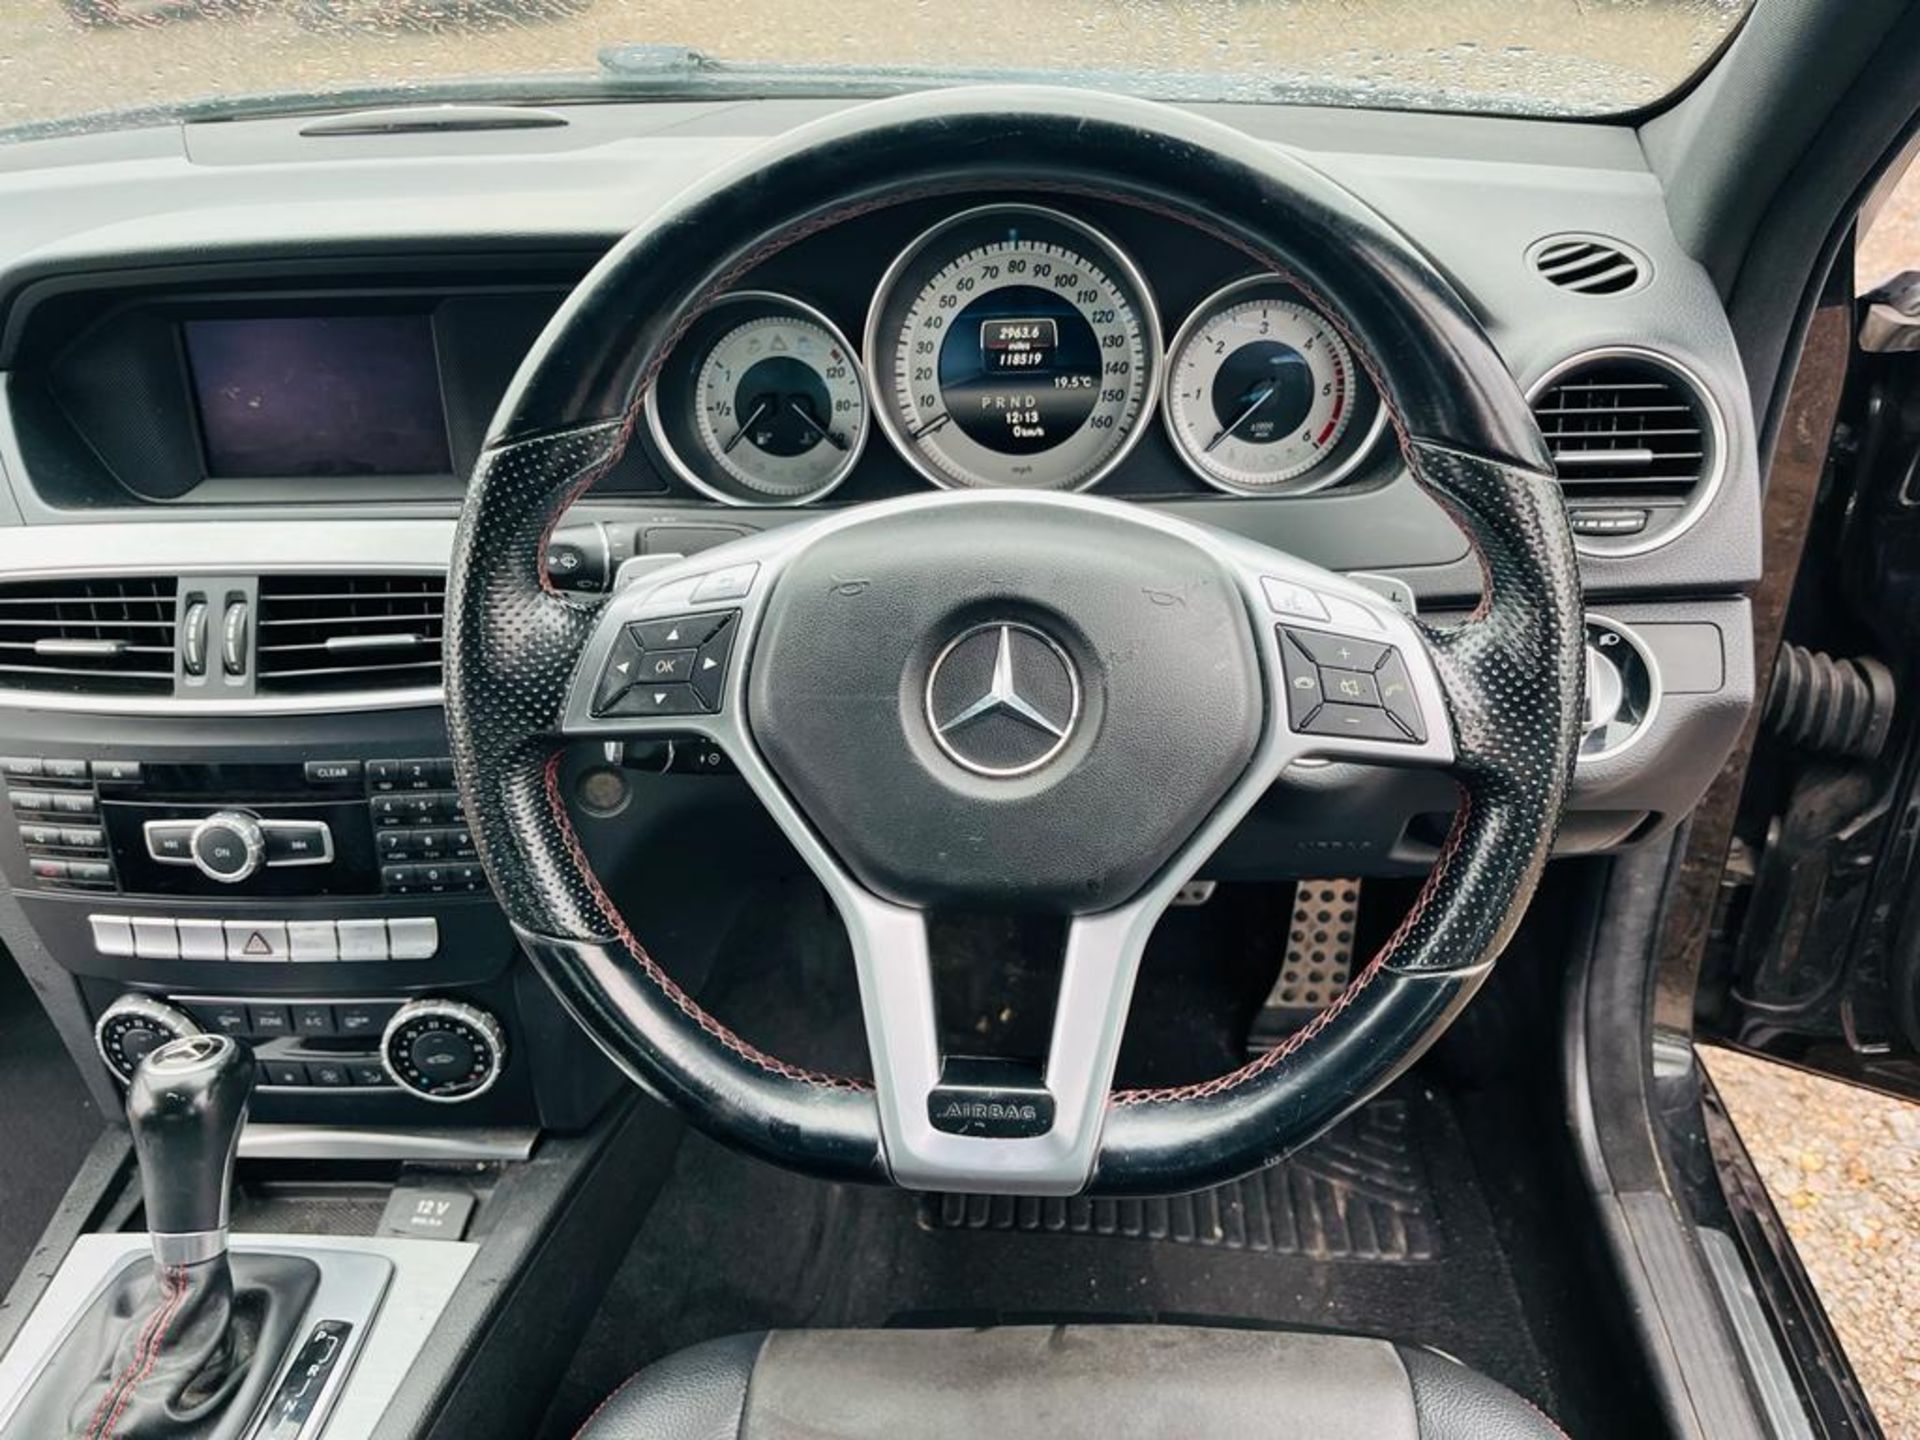 ** ON SALE ** Mercedes-Benz C250 CDI AMG Sport 2.1 2013 "63 Reg" - Automatic - Start/Stop - No Vat - Image 14 of 28